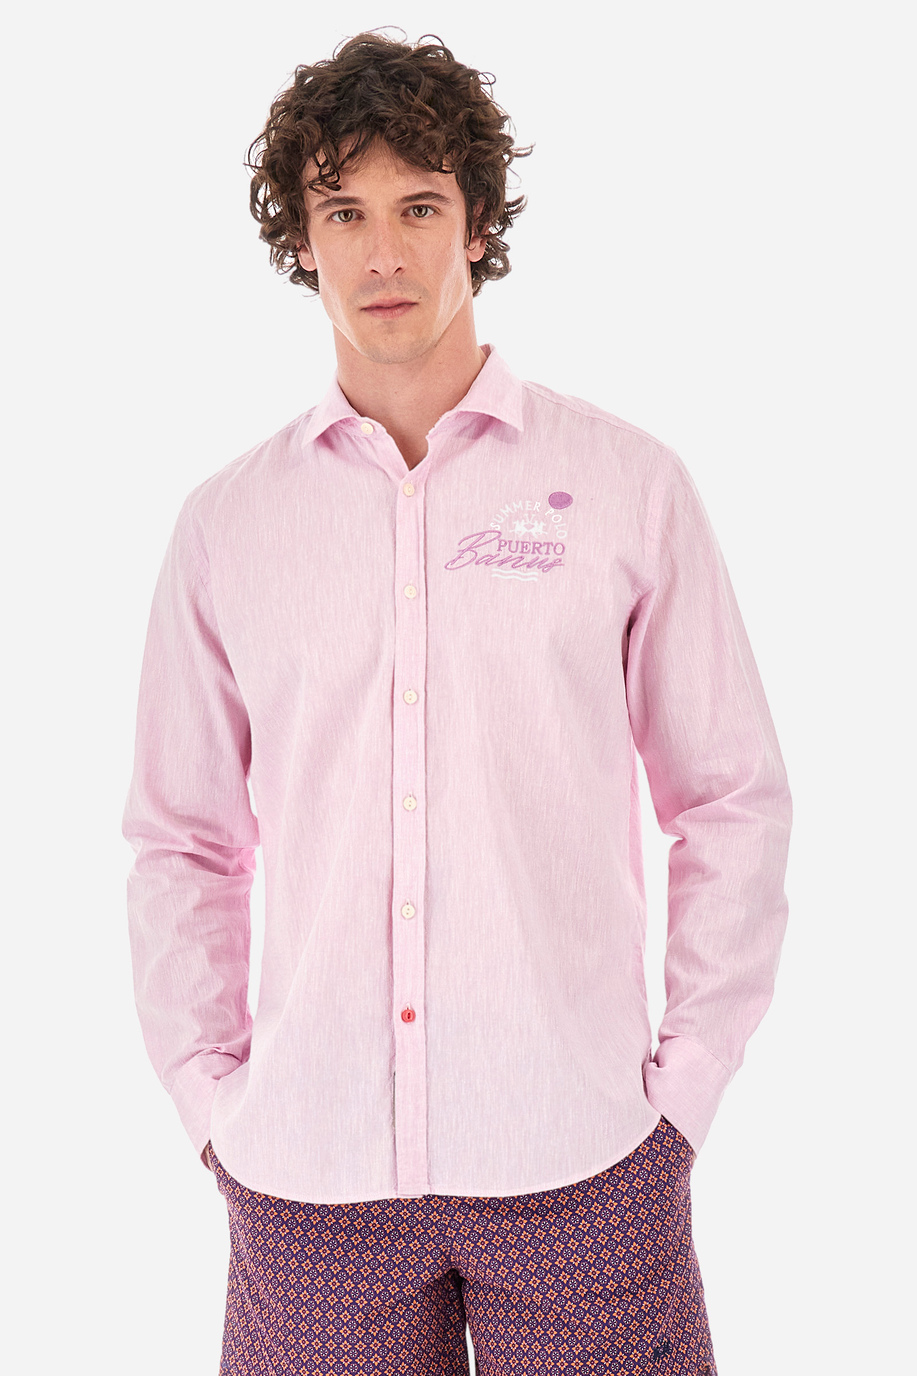 Regular-fit shirt in cotton and linen - Innocent - Shirts | La Martina - Official Online Shop